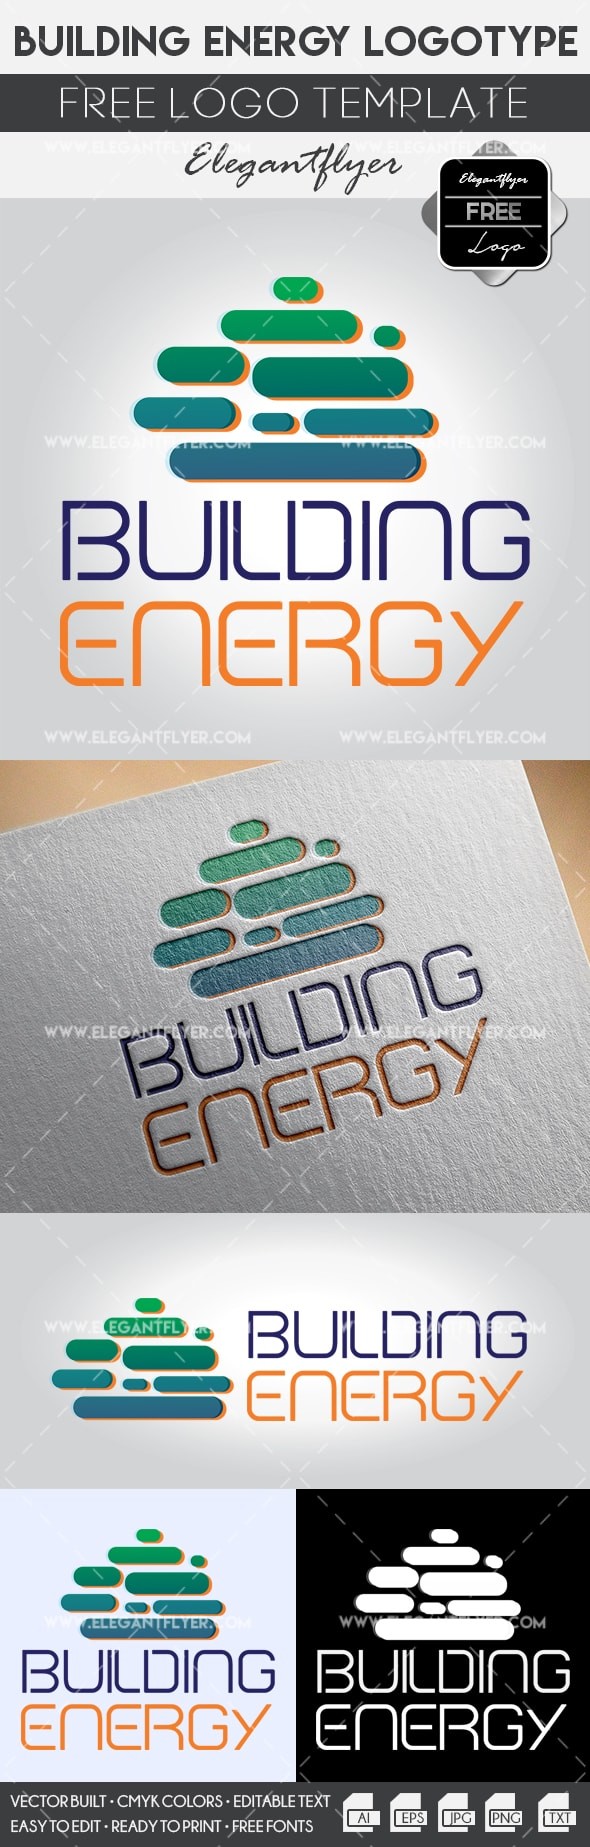 Building Energy by ElegantFlyer